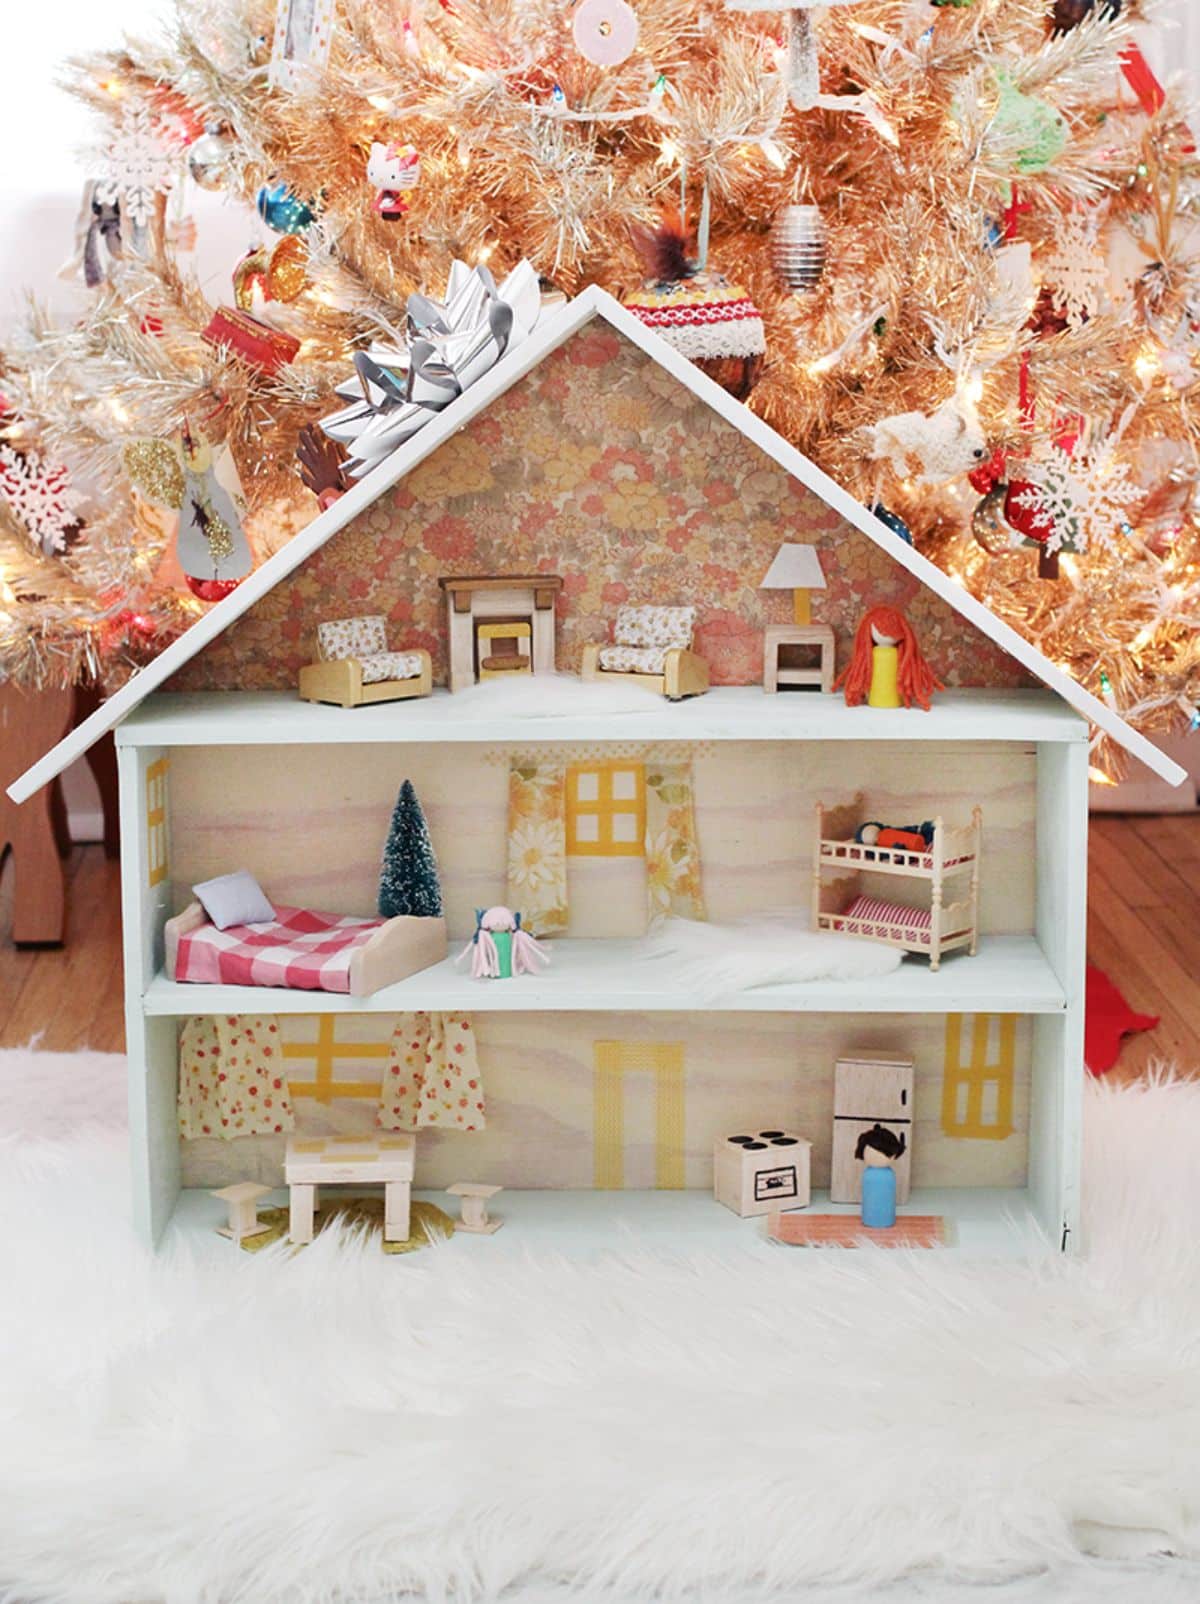 DIY Dollhouse Under a Christmas Tree